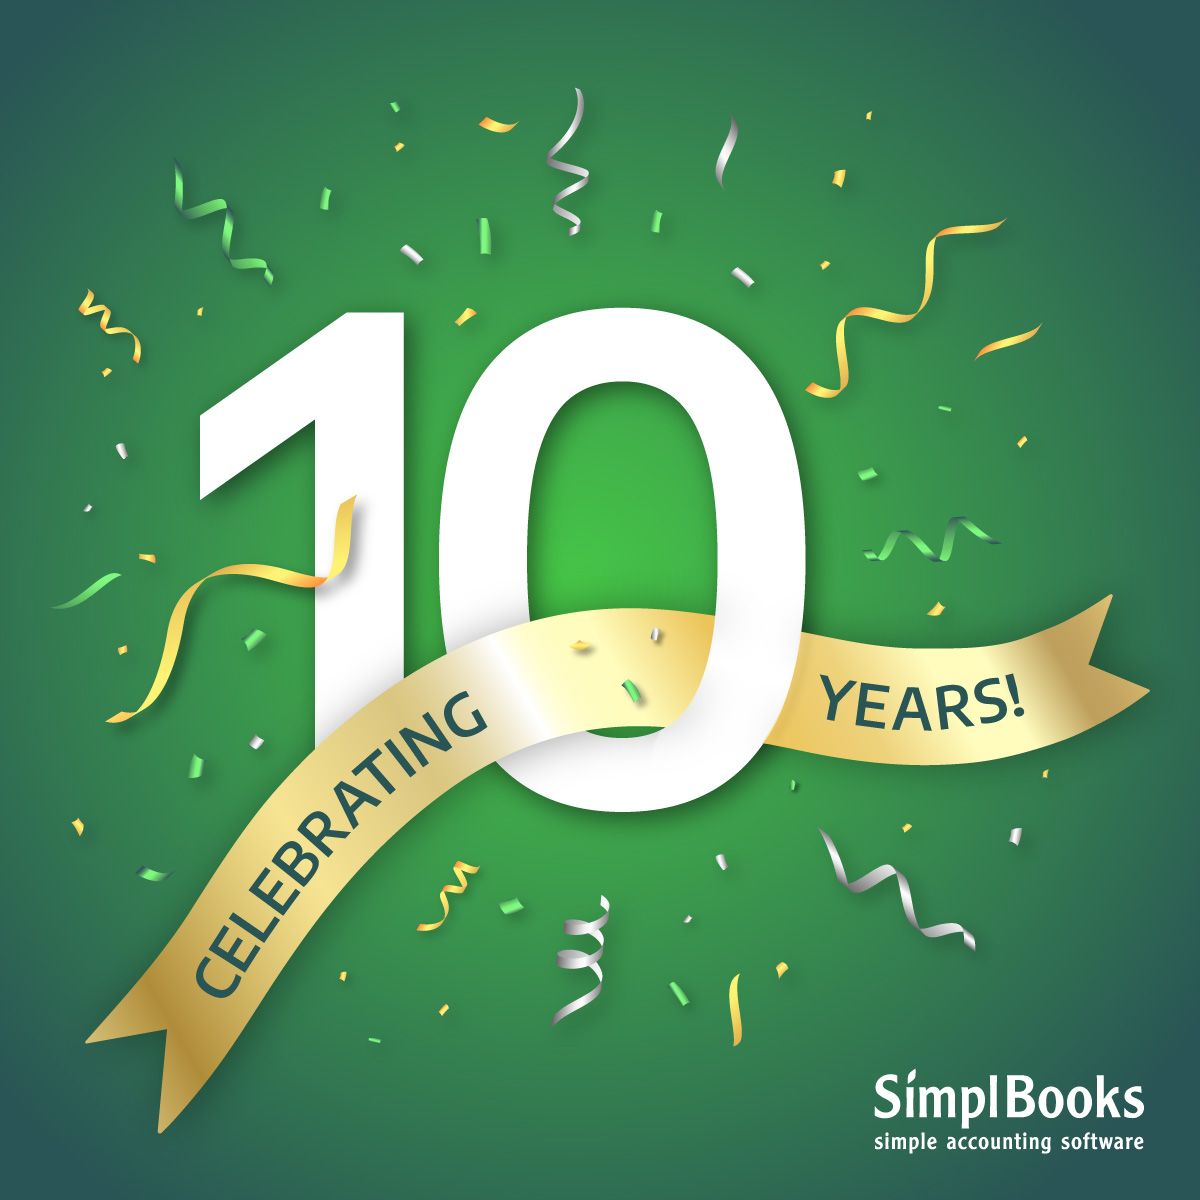 SimplBooks anniversary